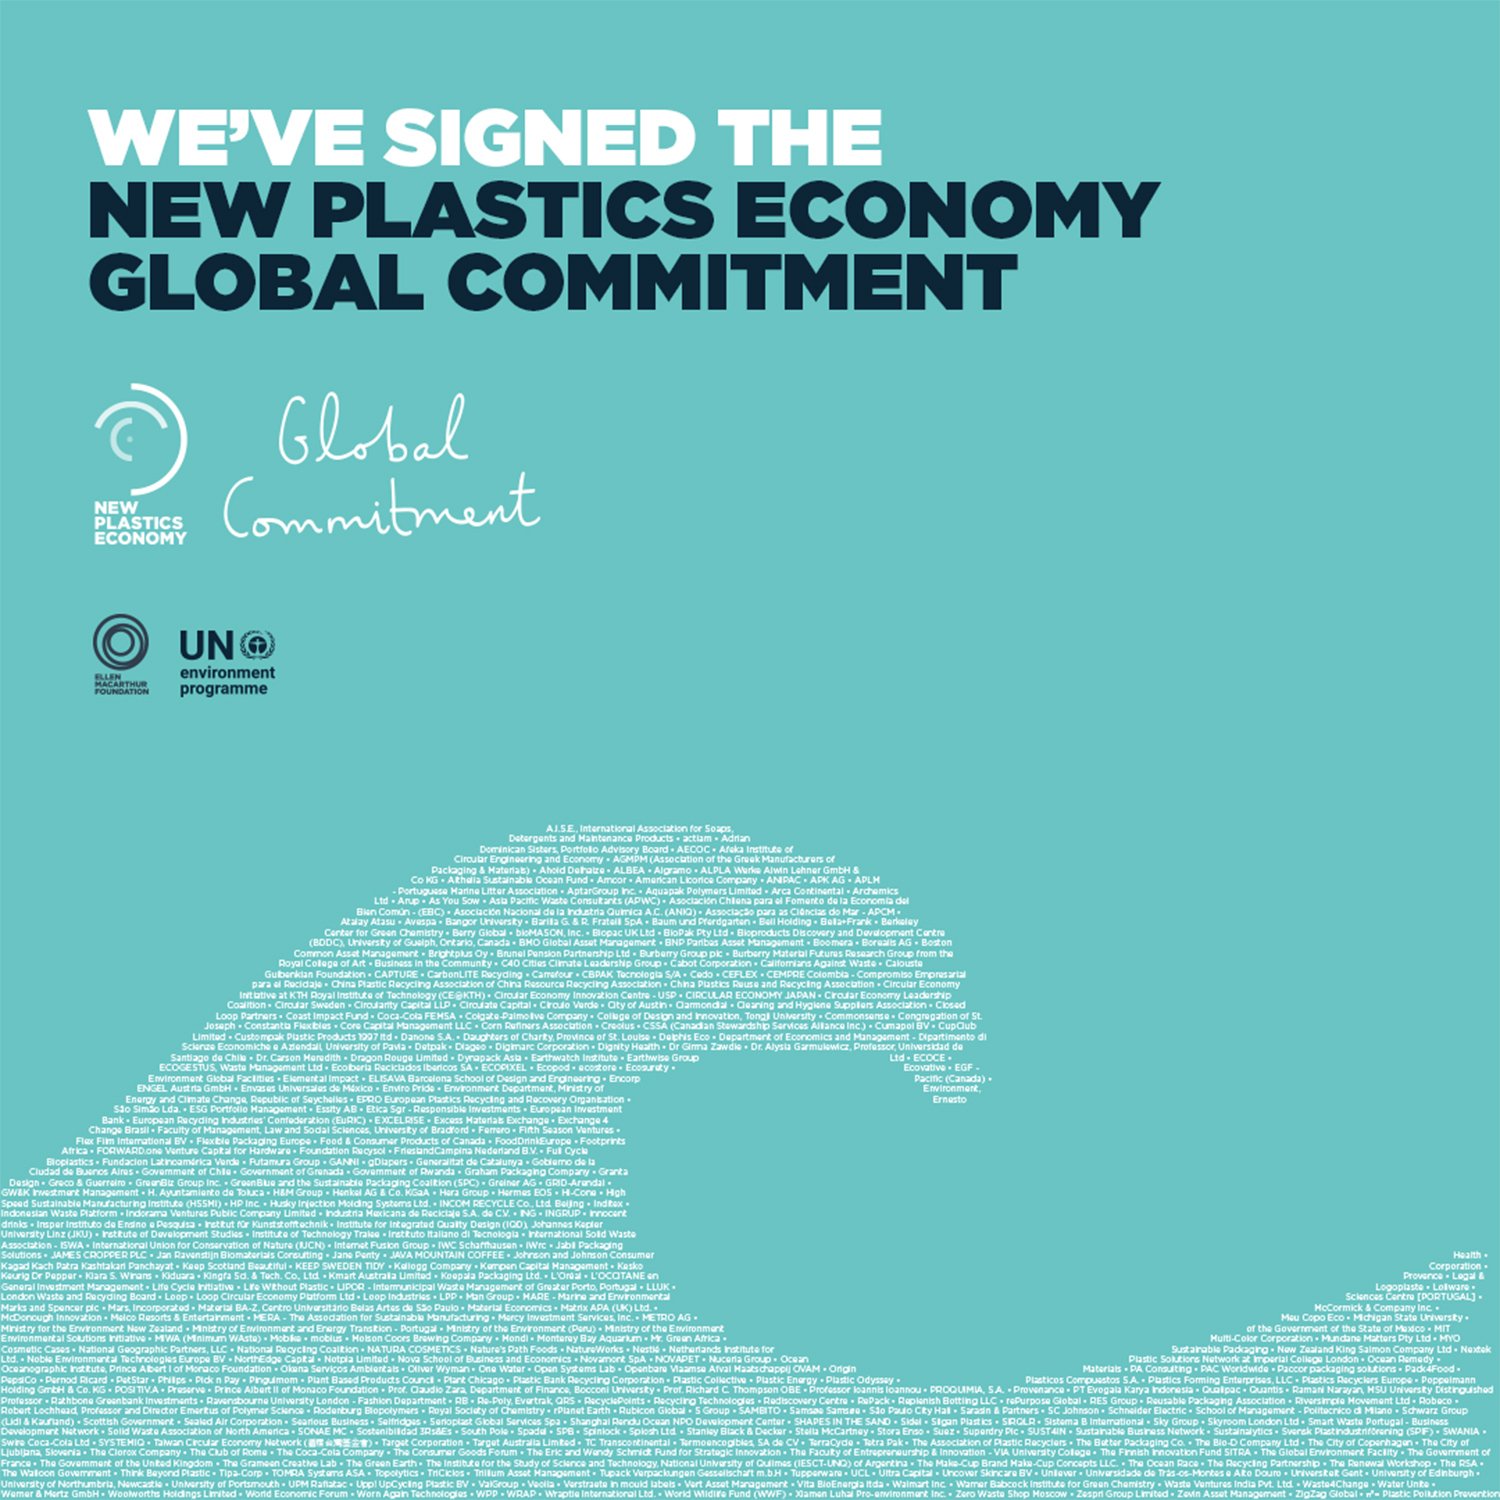 Image showing signatories to the New Plastics Economy